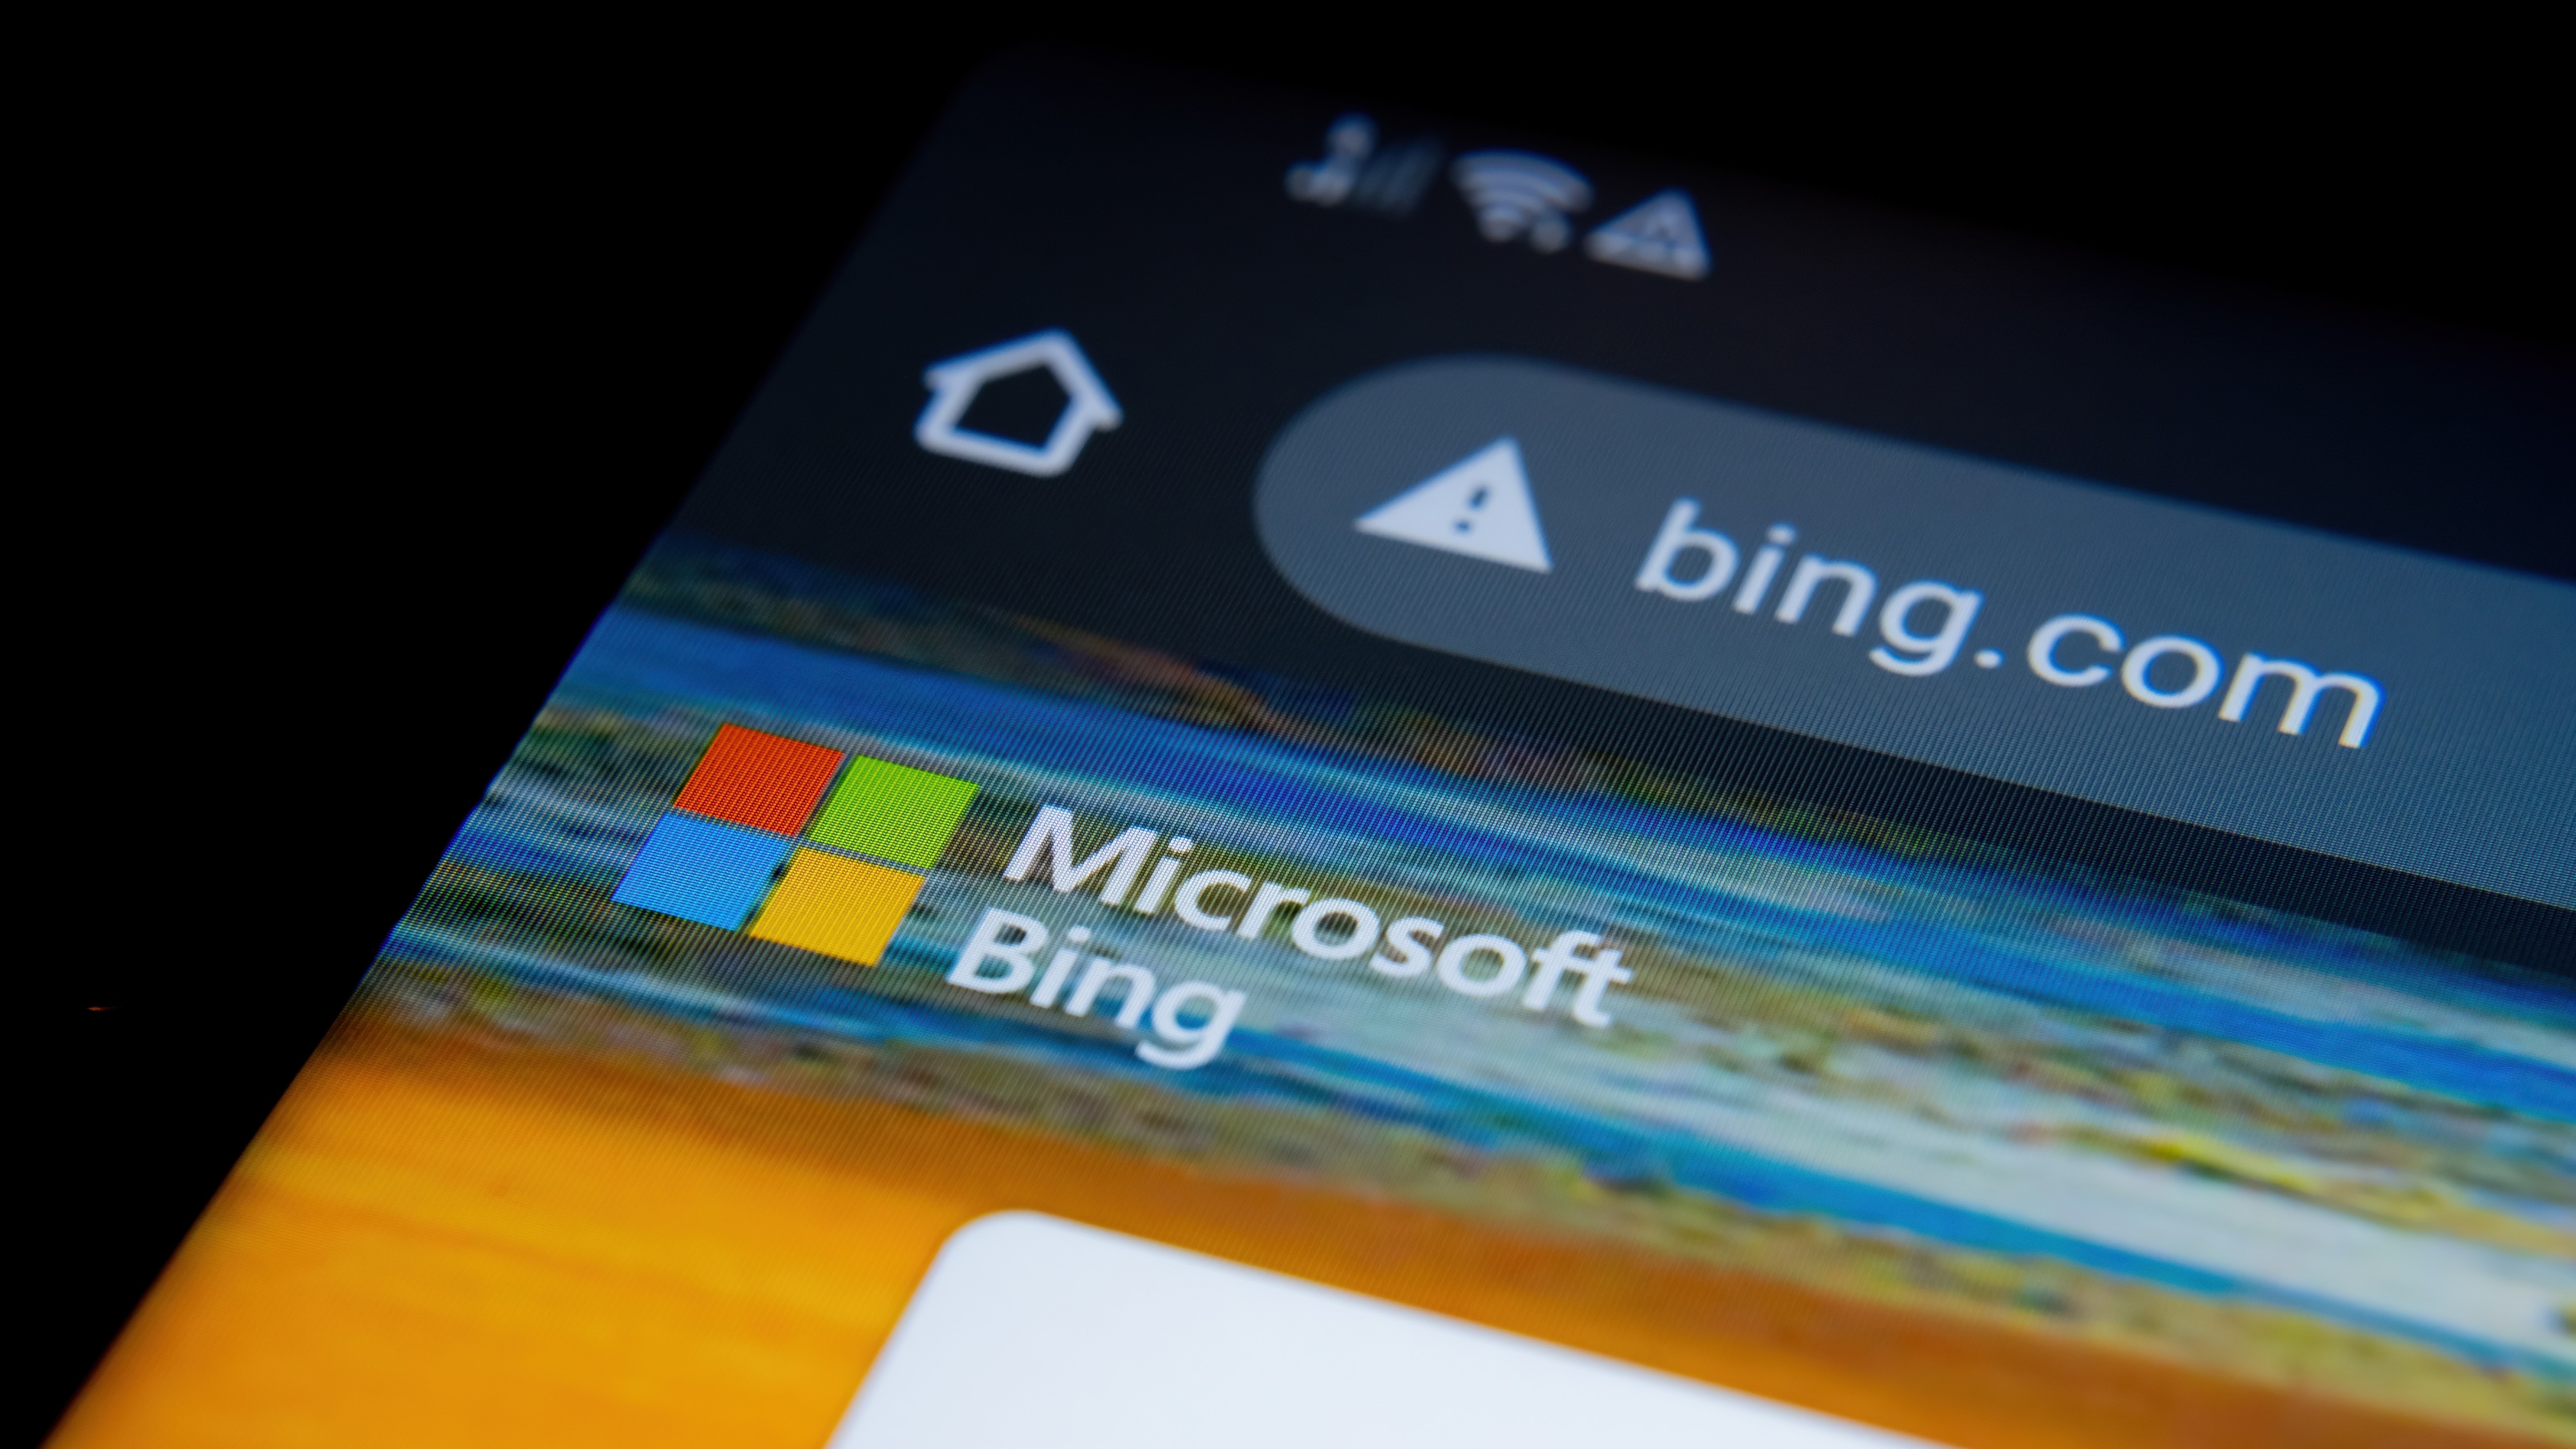 Похоже, Microsoft уже удалила панель задач Bing ChatGPT из Windows 11.